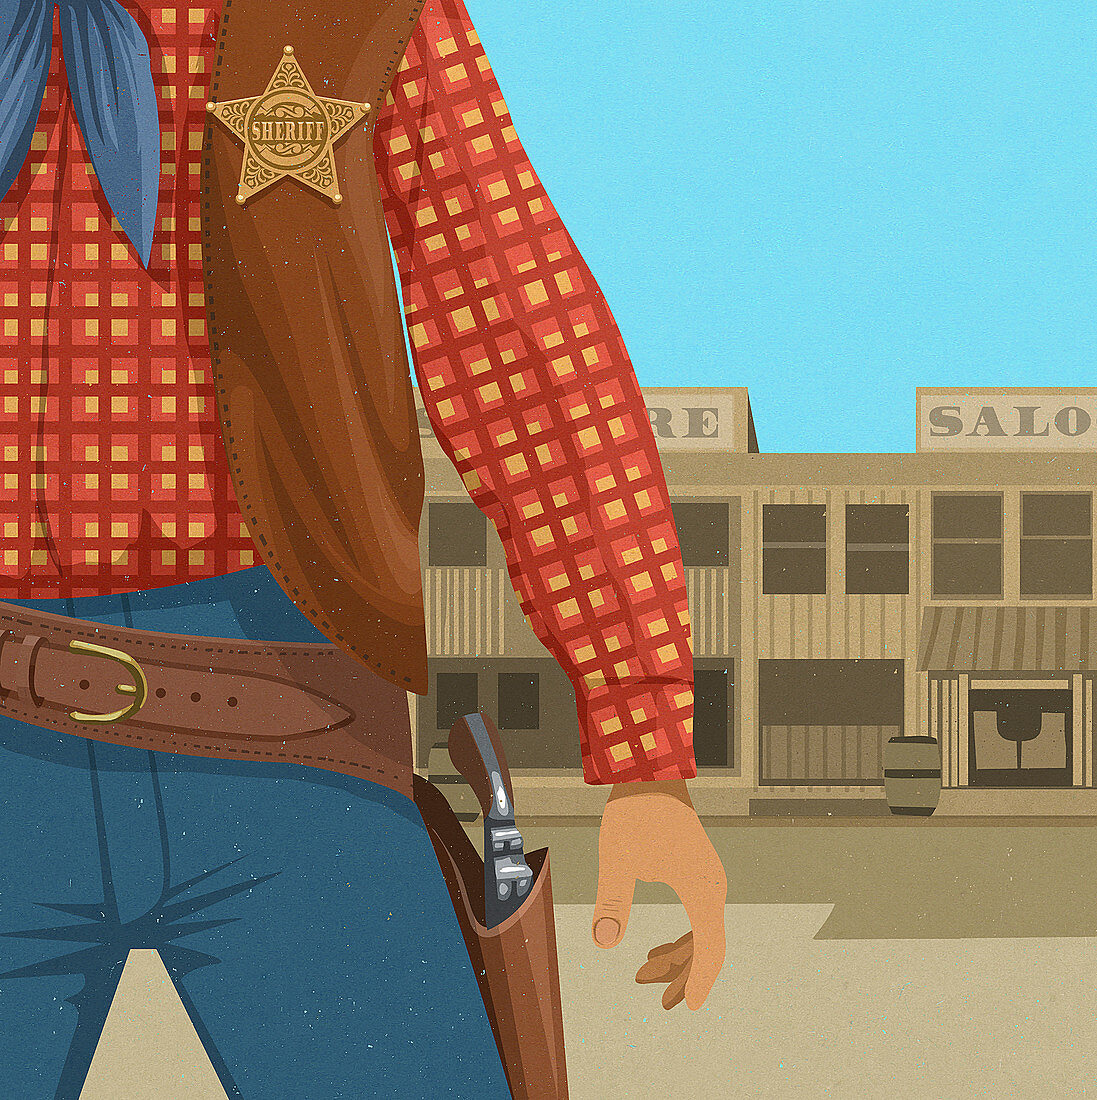 Wild West sheriff ready to draw gun, illustration